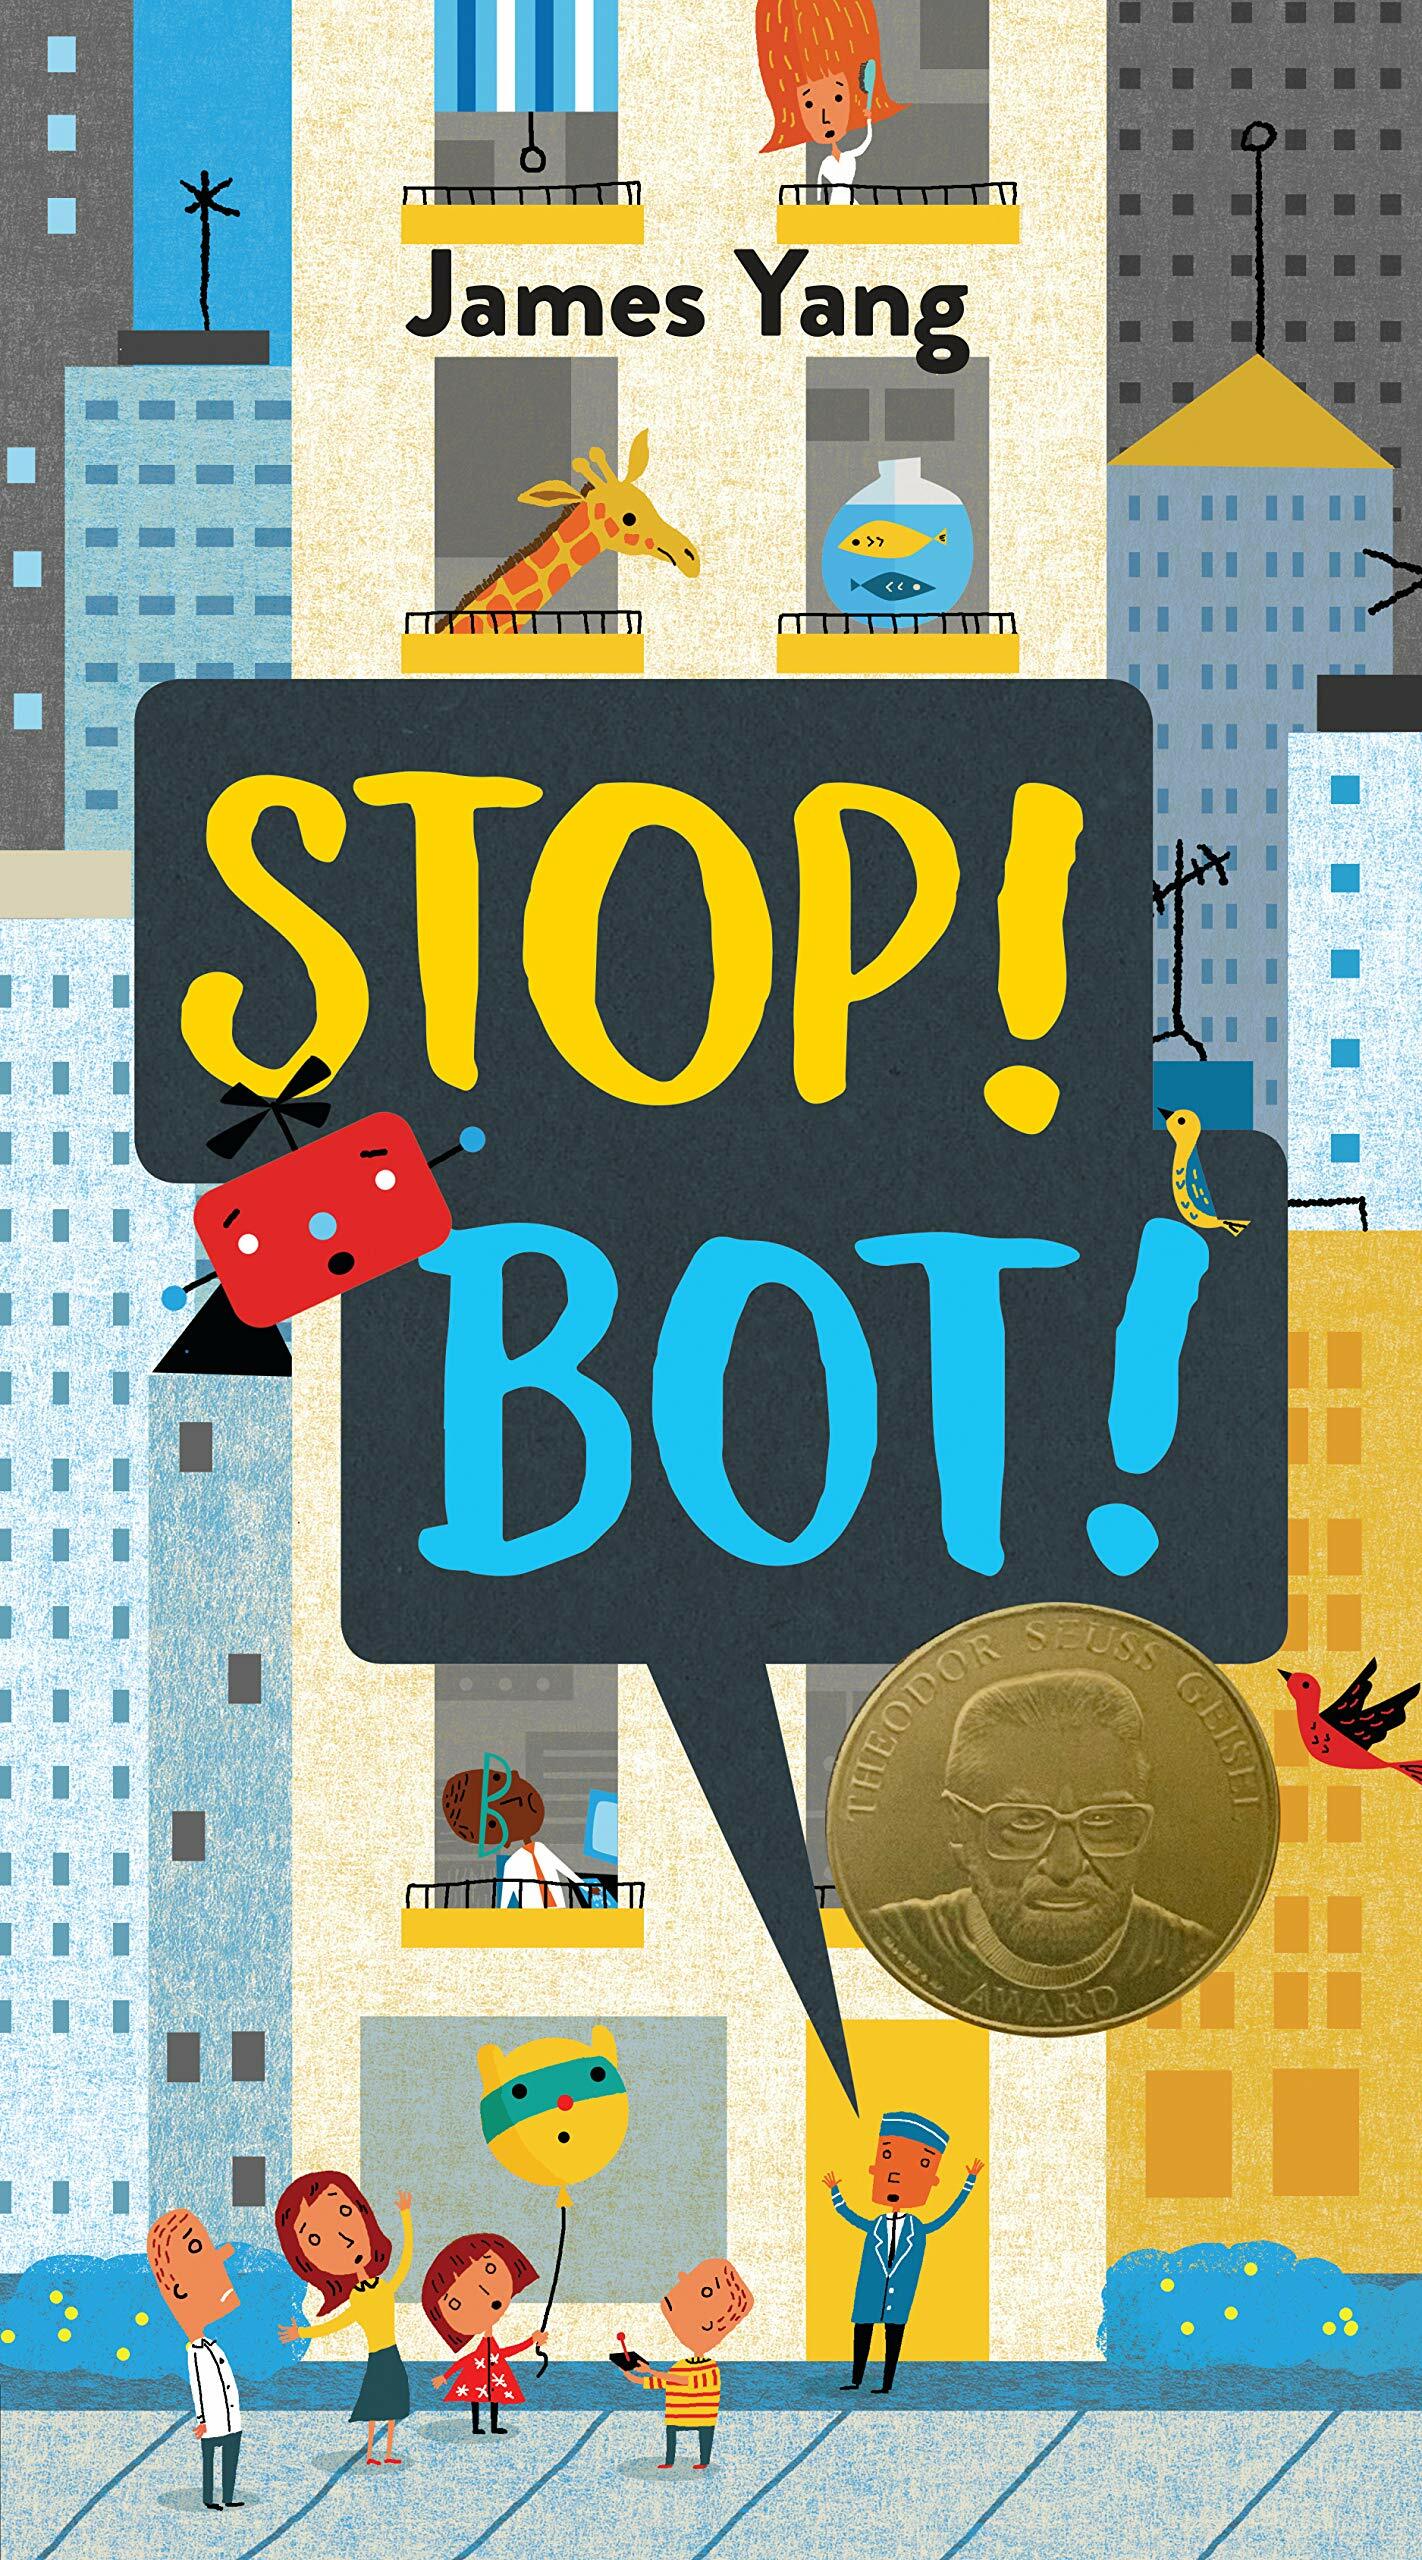 Stop! Bot! (Hardcover)